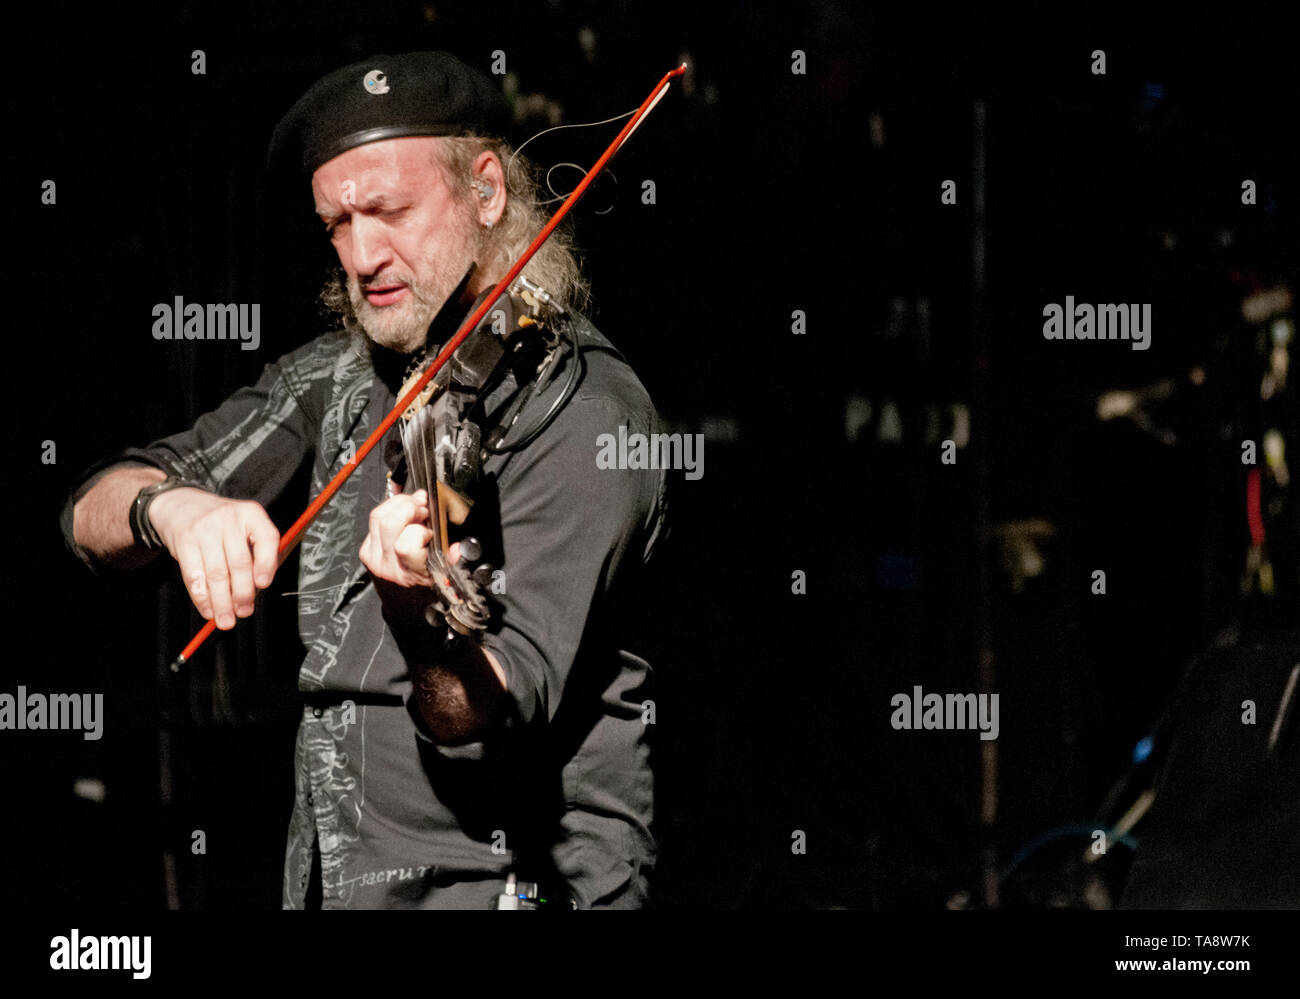 Il violinista Sergey Ryabtsev, da Gogol Berdello Foto Stock